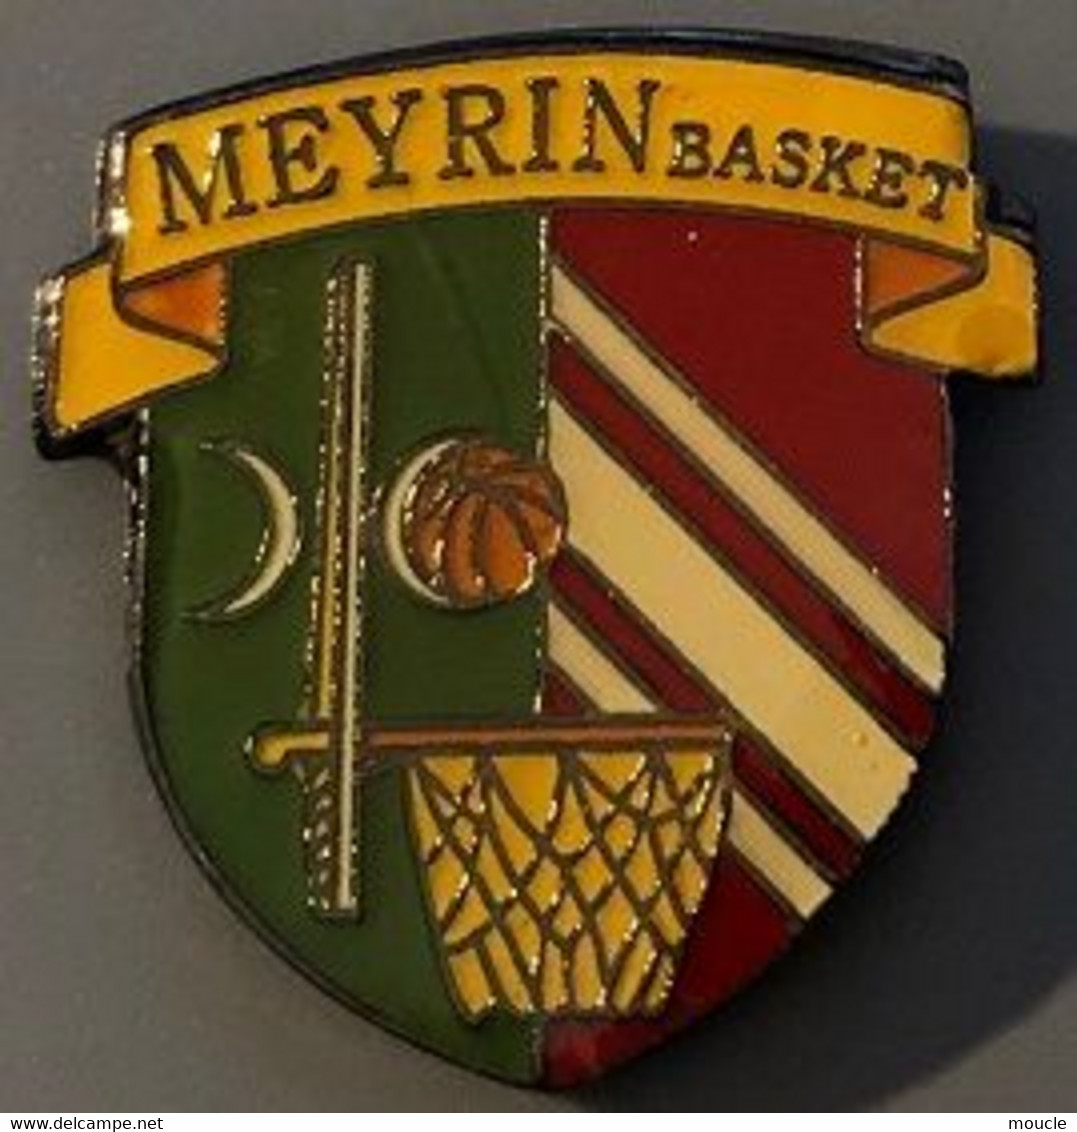 MEYRIN BASKET - GENEVE - SUISSE - SCHWEIZ - SWITZERLAND - PANIER - BLASON - BALLON - EPEE  -    (14) - Basketbal